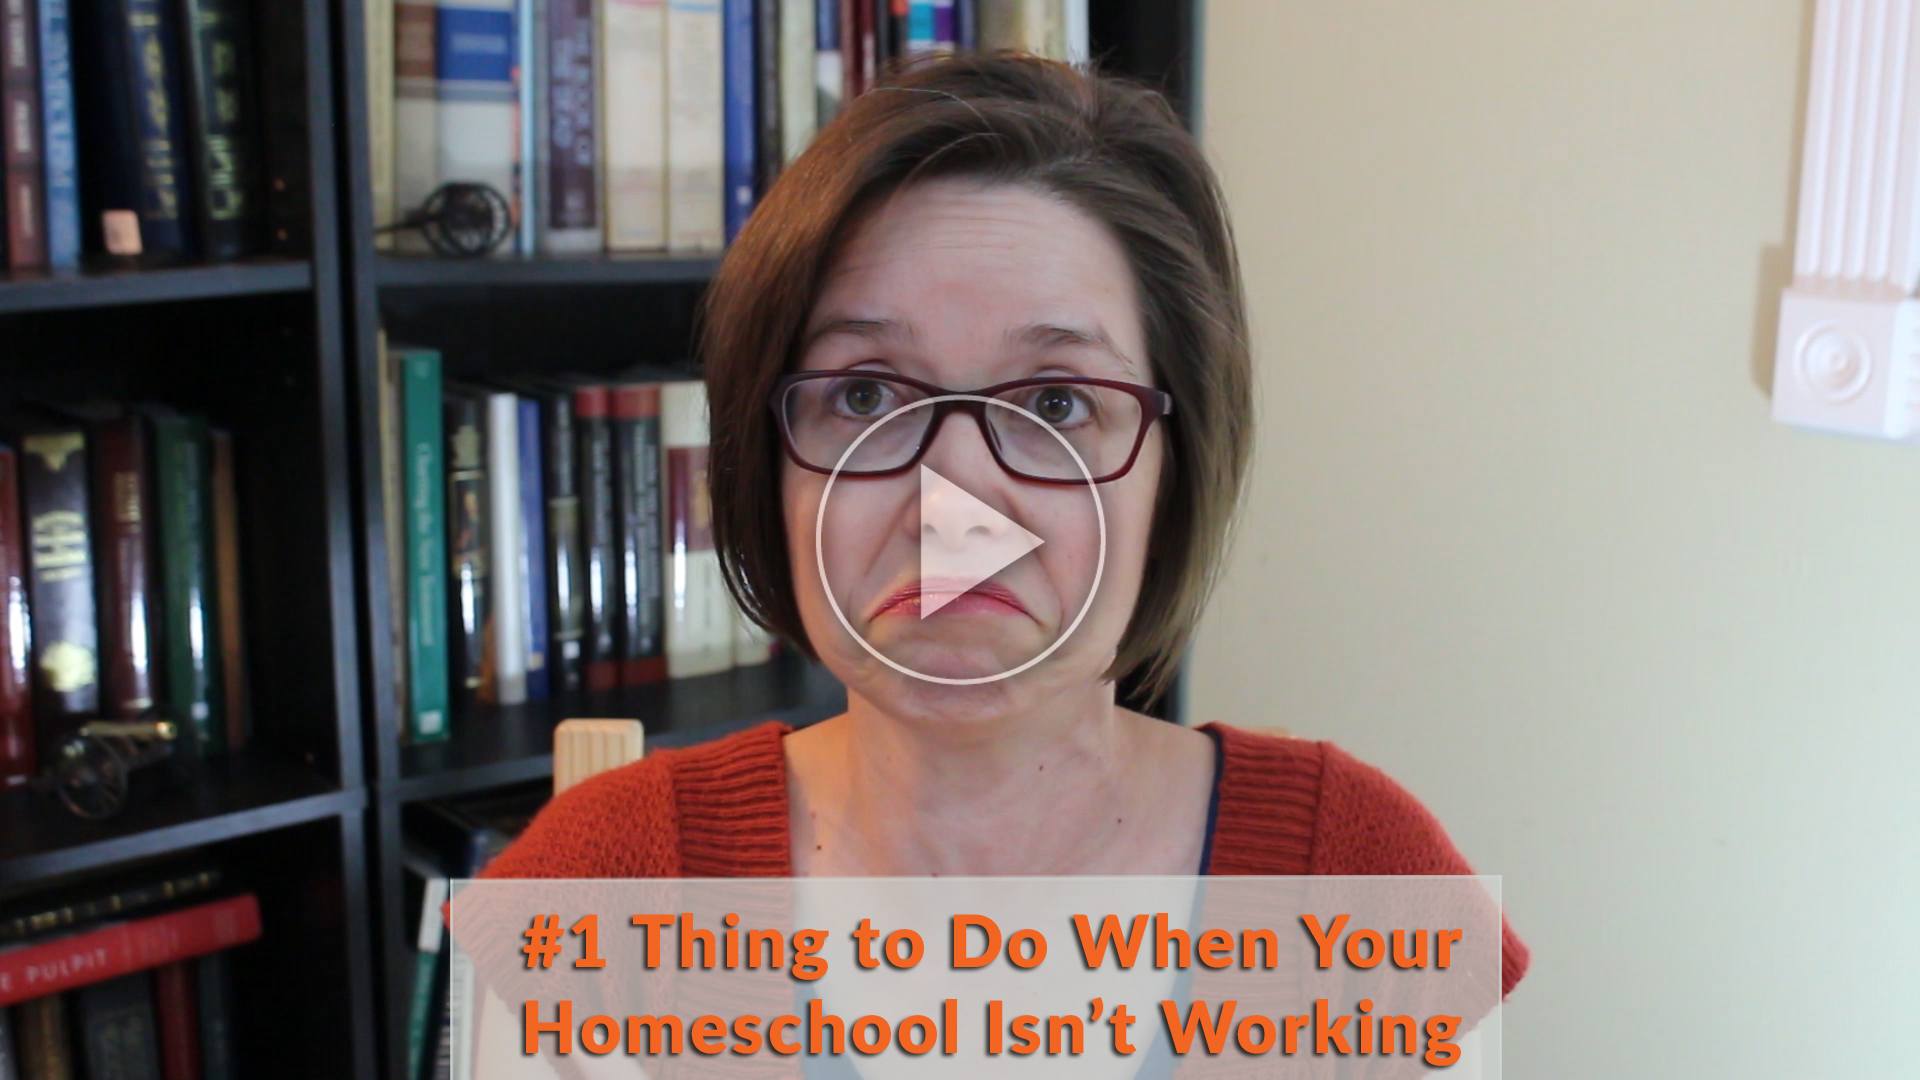 How to make homeschool work when it’s not working